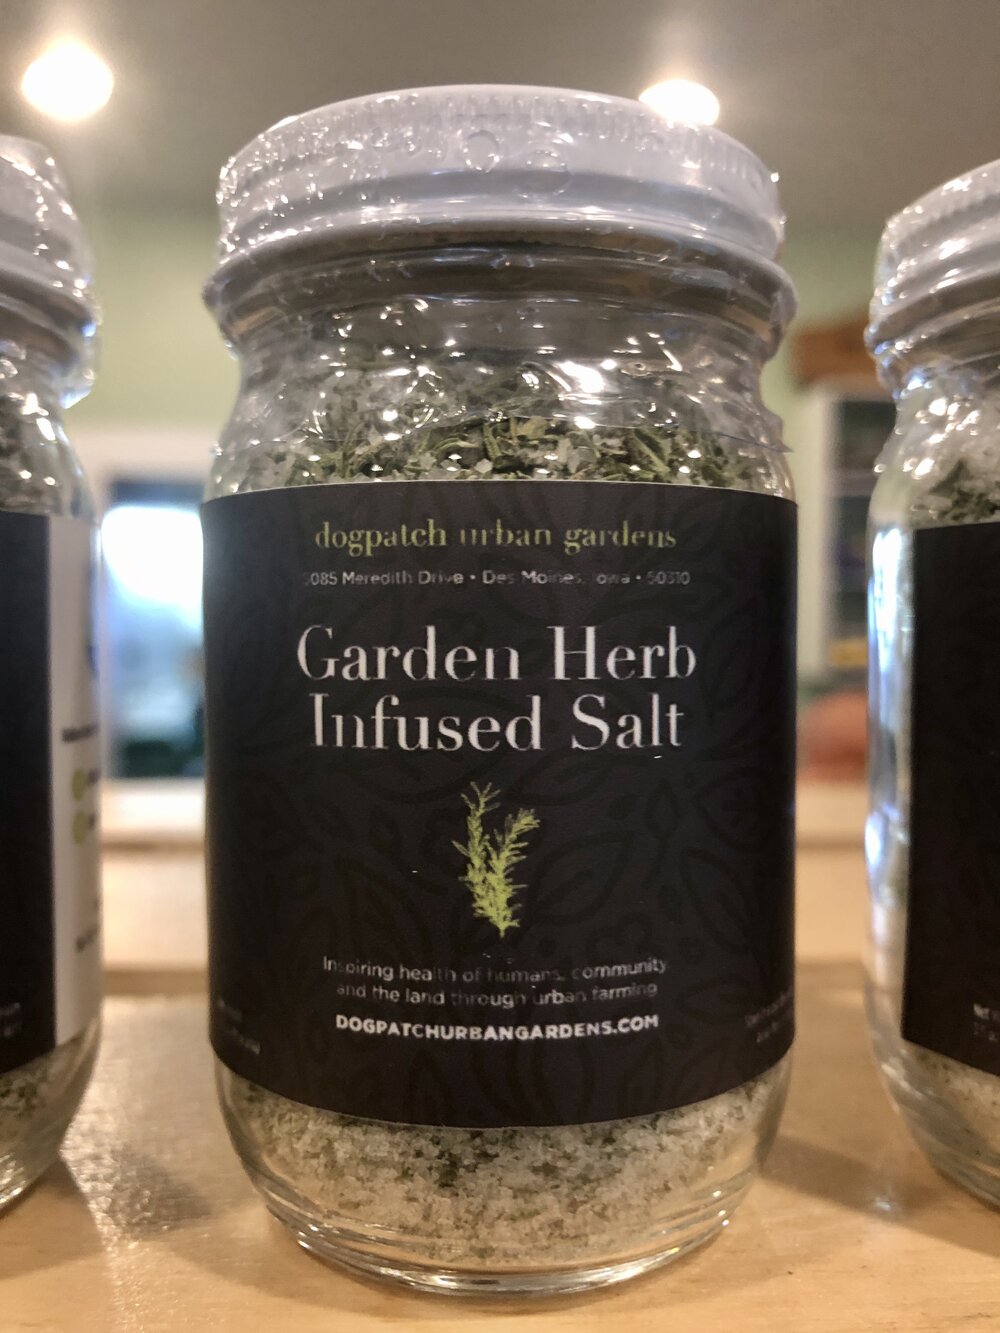 Garden Herb Infused Salt (3.5 oz) - DUG